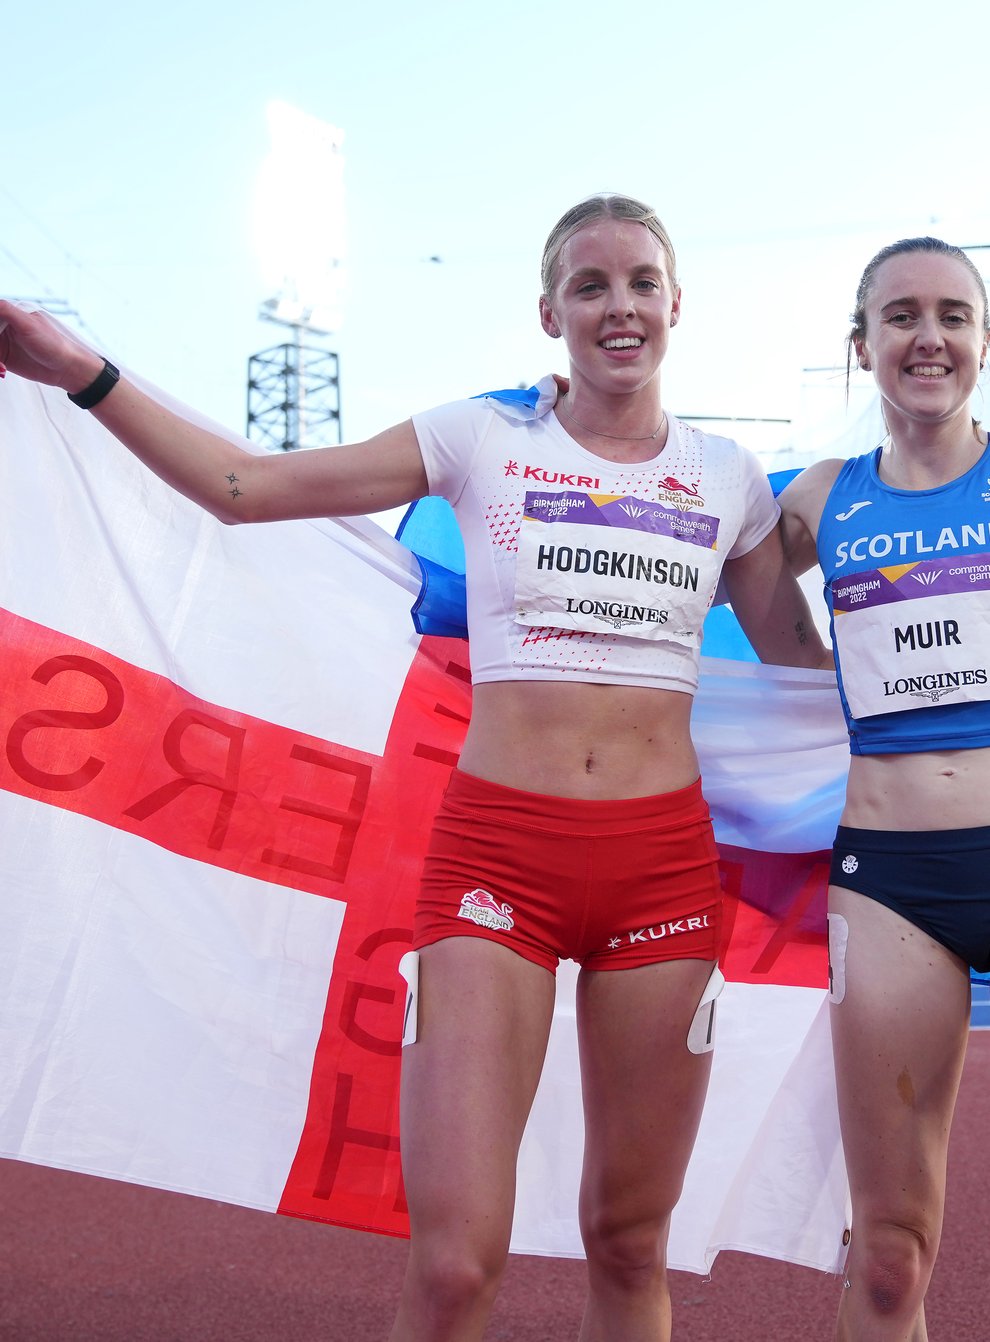 England’s Keely Hodgkinson, left, celebrates wining silver with Laura Muir, who took bronze (Martin Rickett/PA)